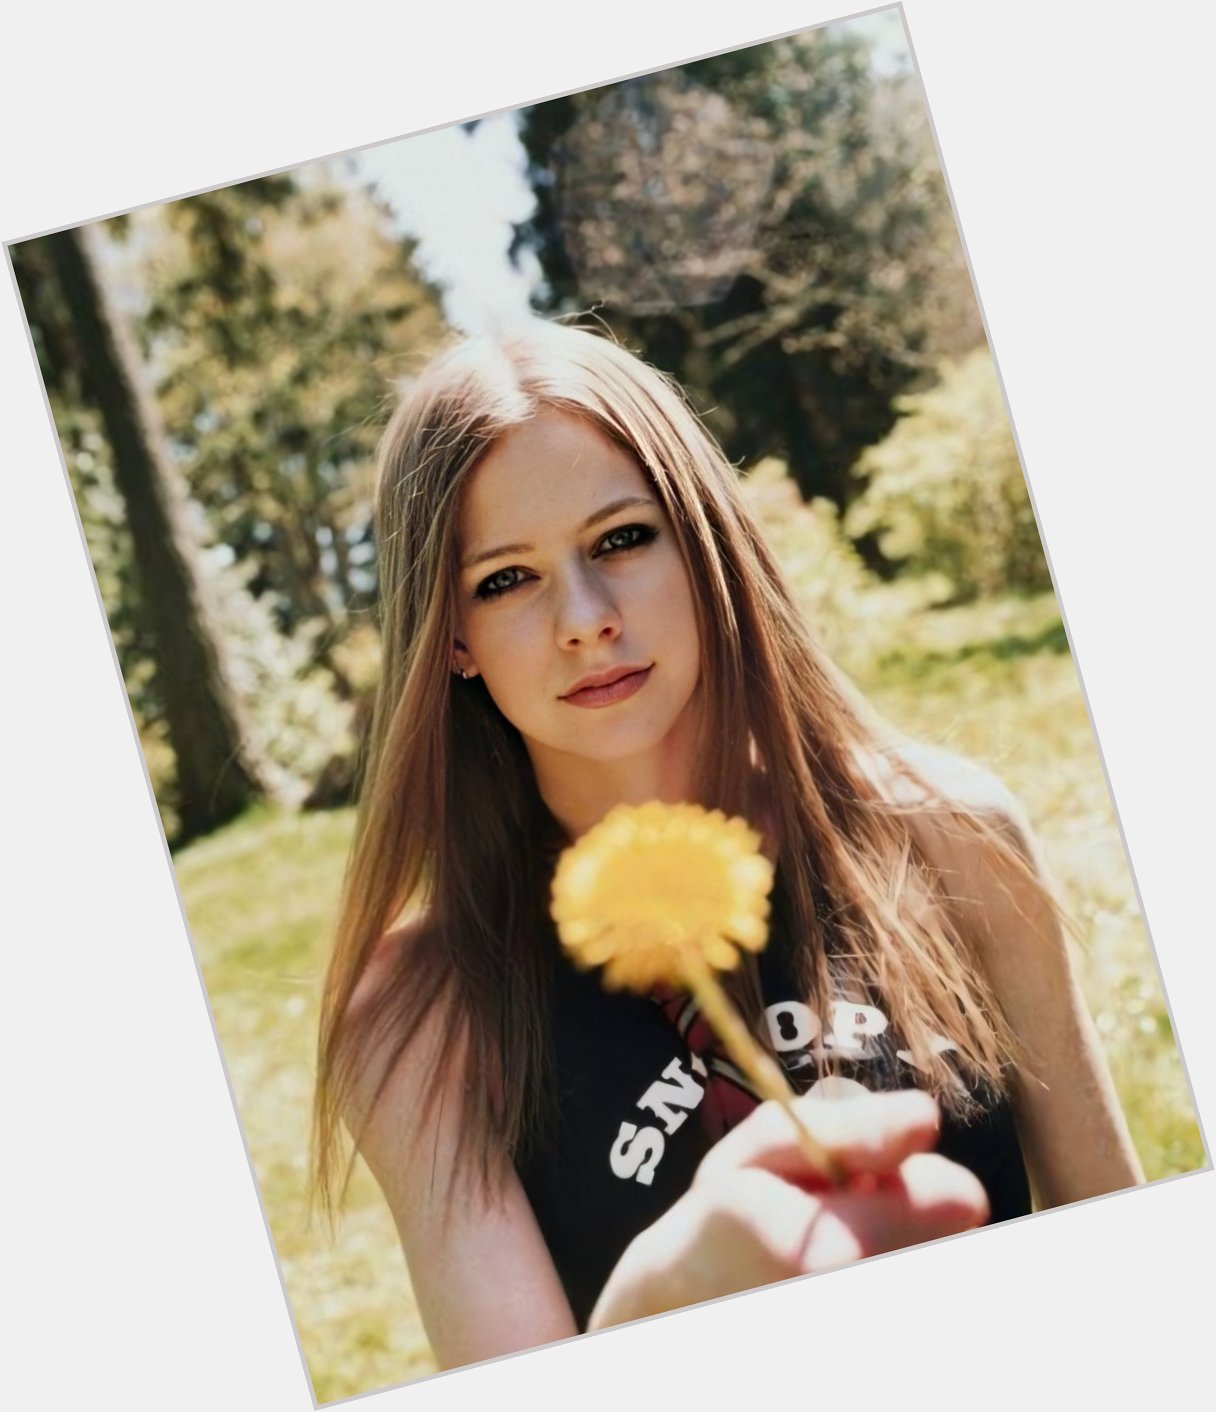                                                                    Happy birthday to Avril Lavigne  